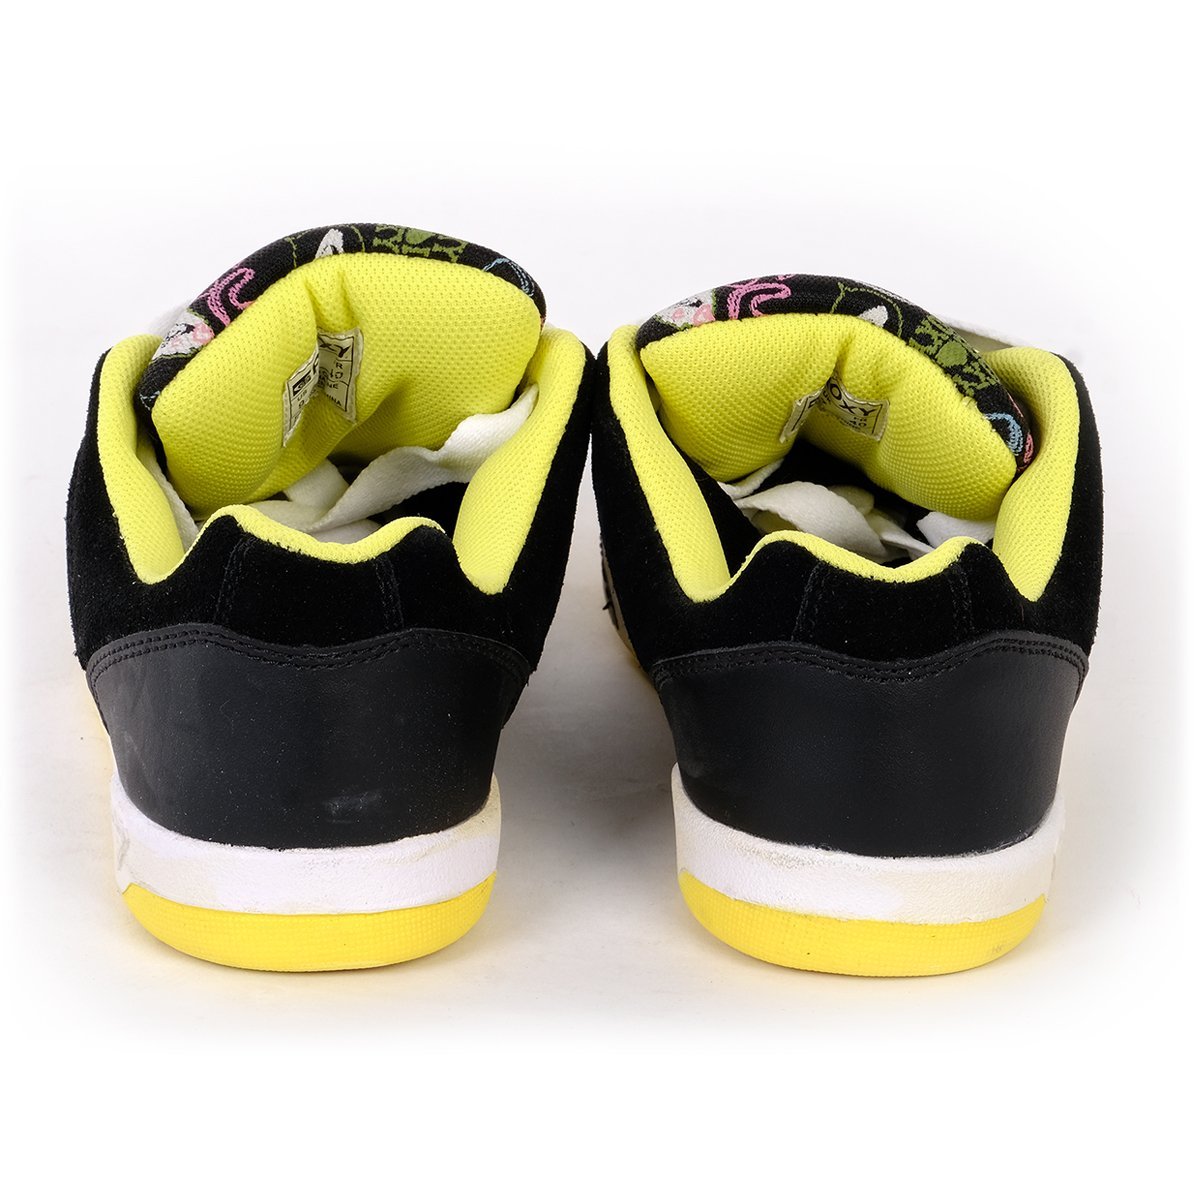 Topánky Roxy SPEED W - čierna/žltá, kvalita II